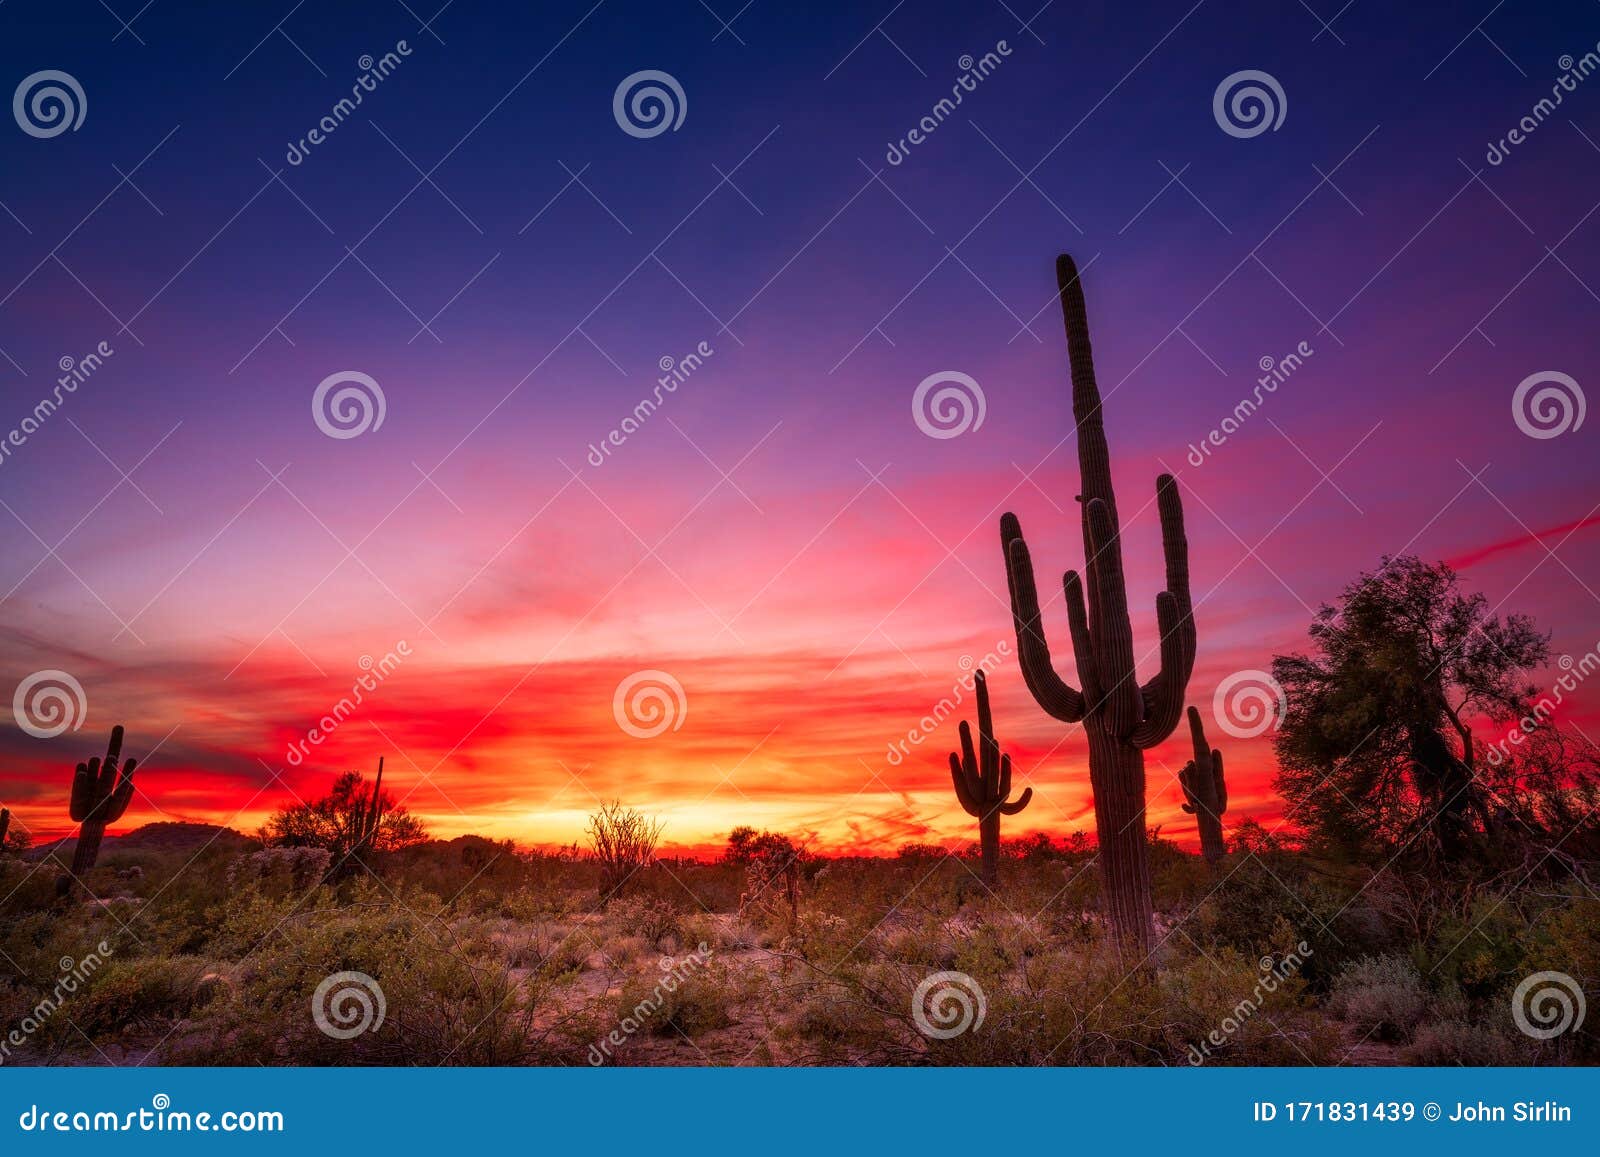 Arizona Desert Landscape at Sunset Stock Image - Image of clouds ...